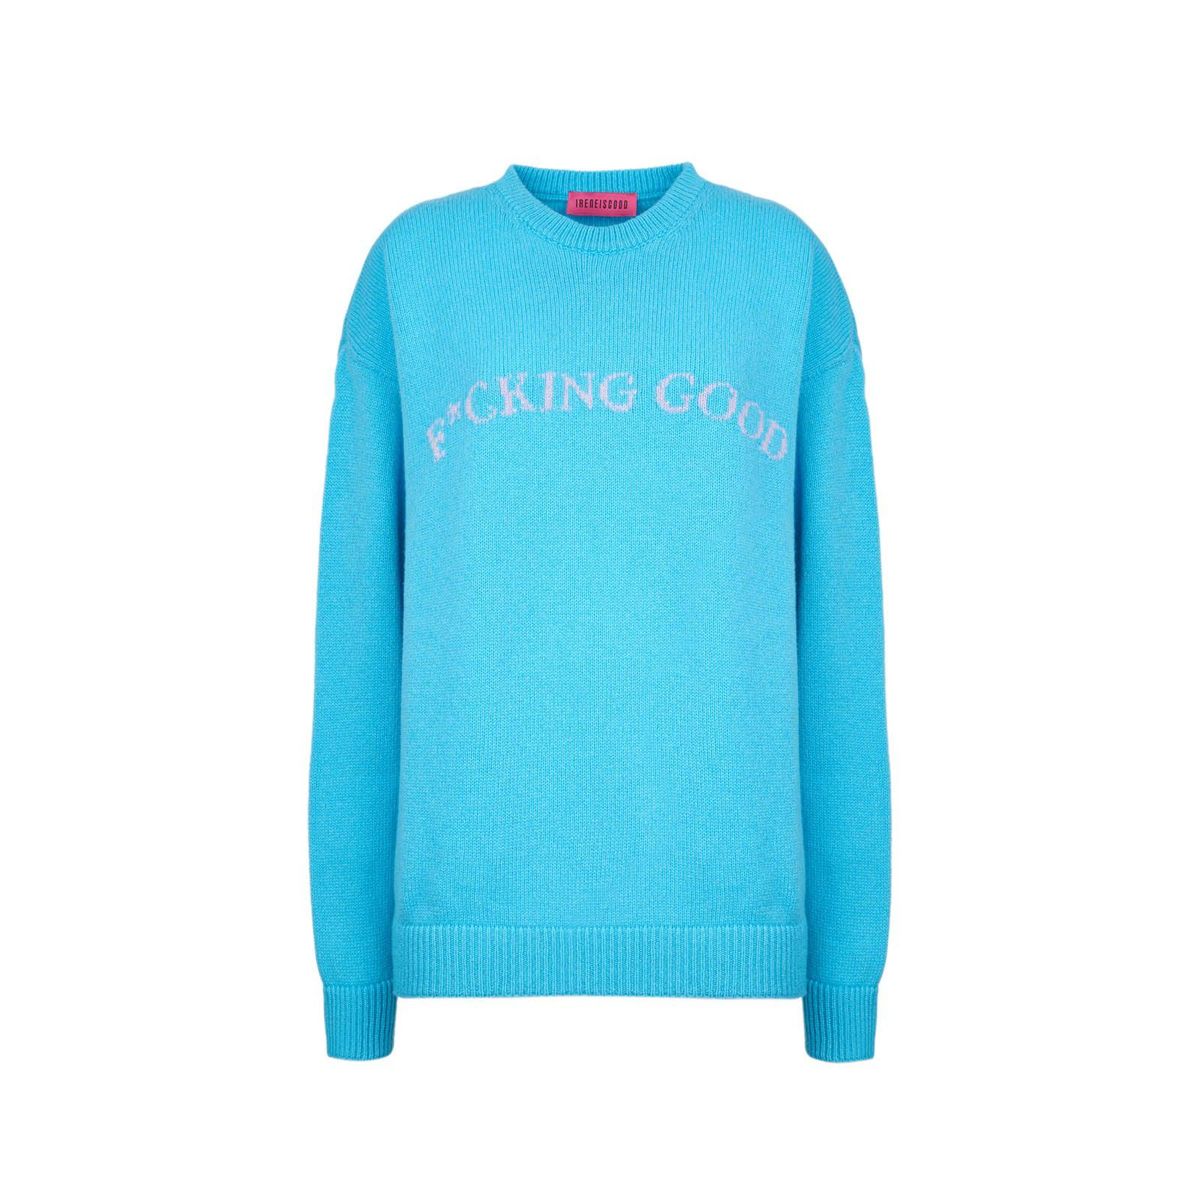 Fking Good Sweater